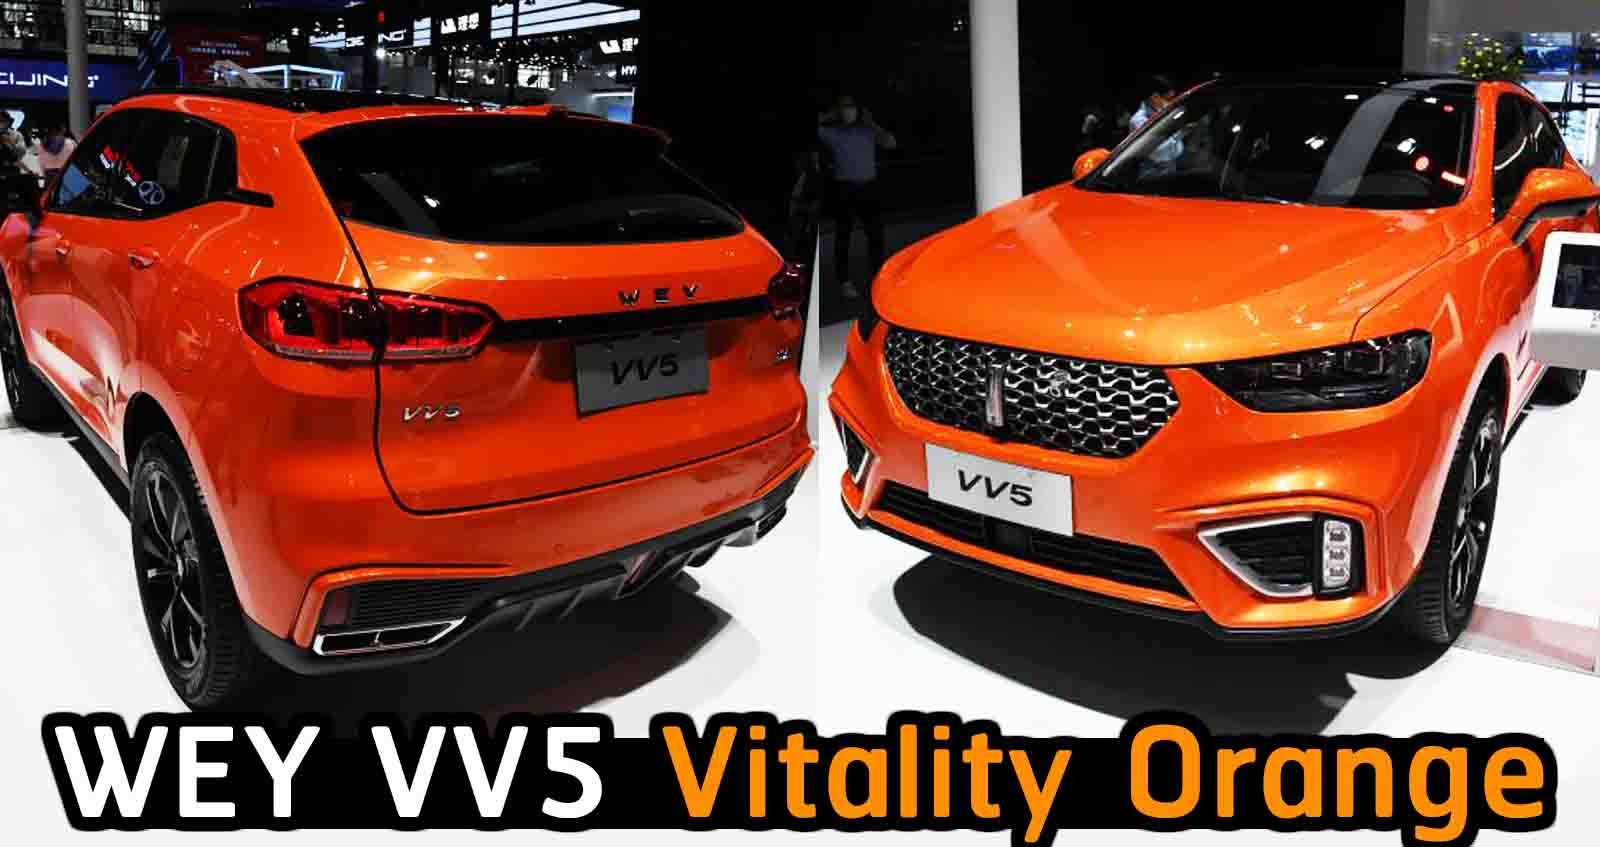 WEY VV5 Vitality Orange Edition รุ่นตัวถังสีส้มพิเศษ ในจีน